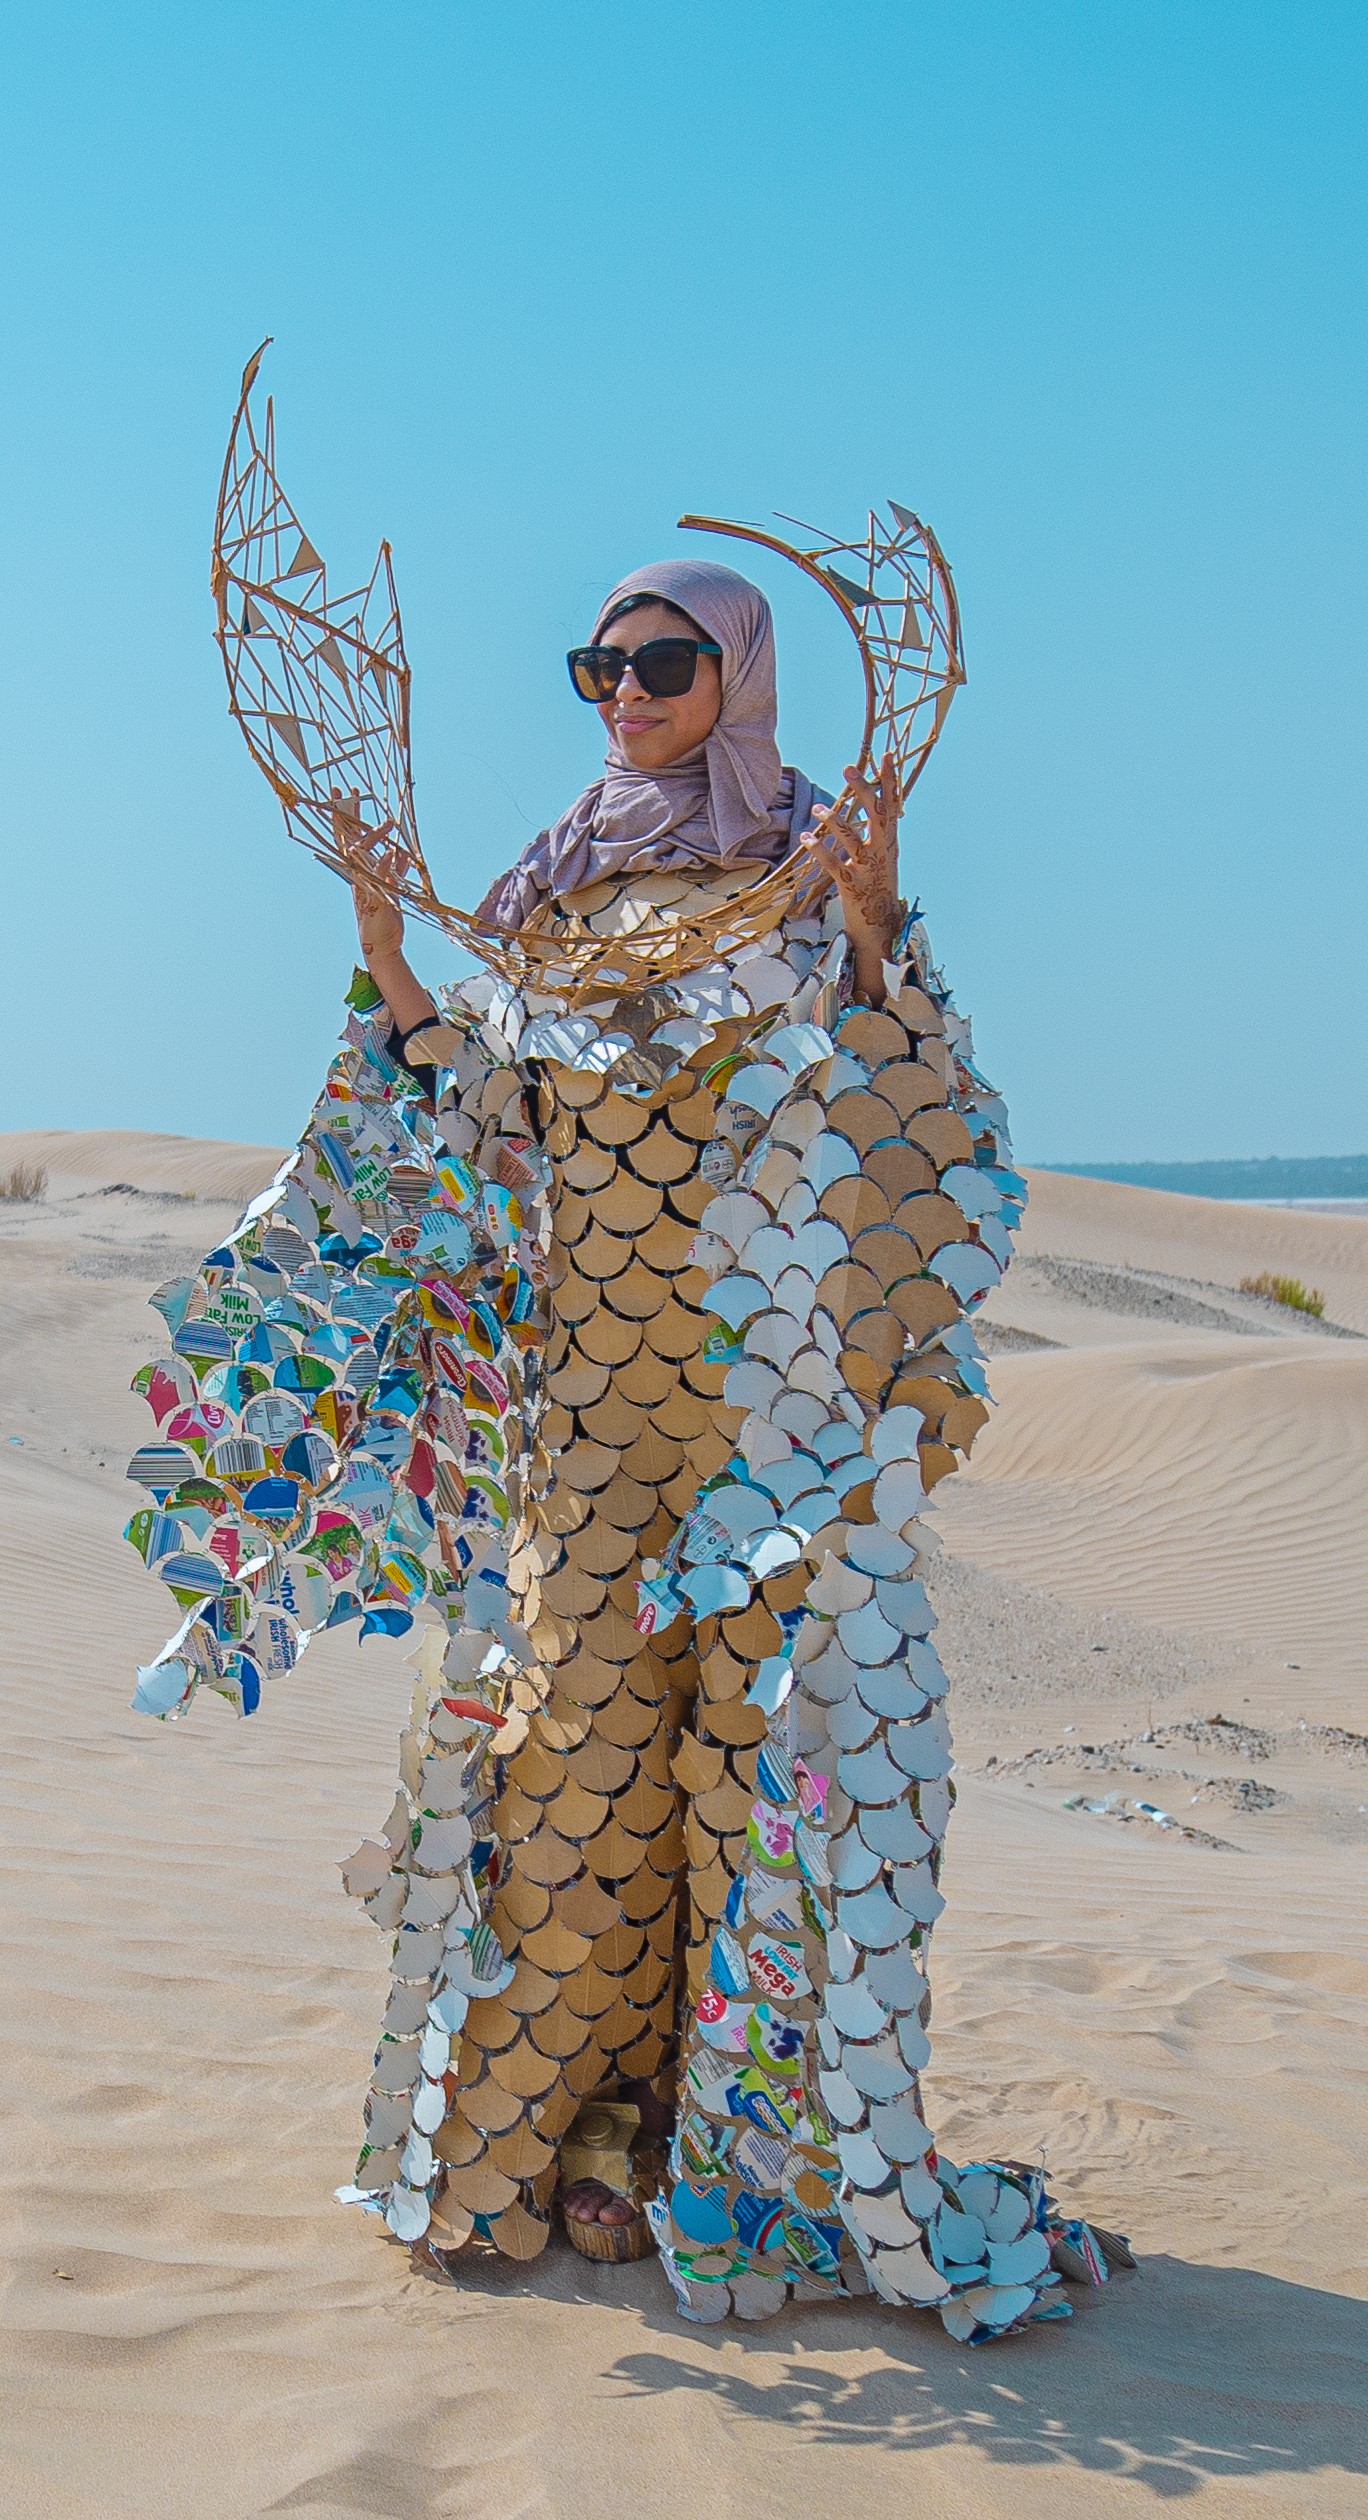 fishing net on dress - Google Search  Junk kouture ideas, Junk kouture, Net  fashion